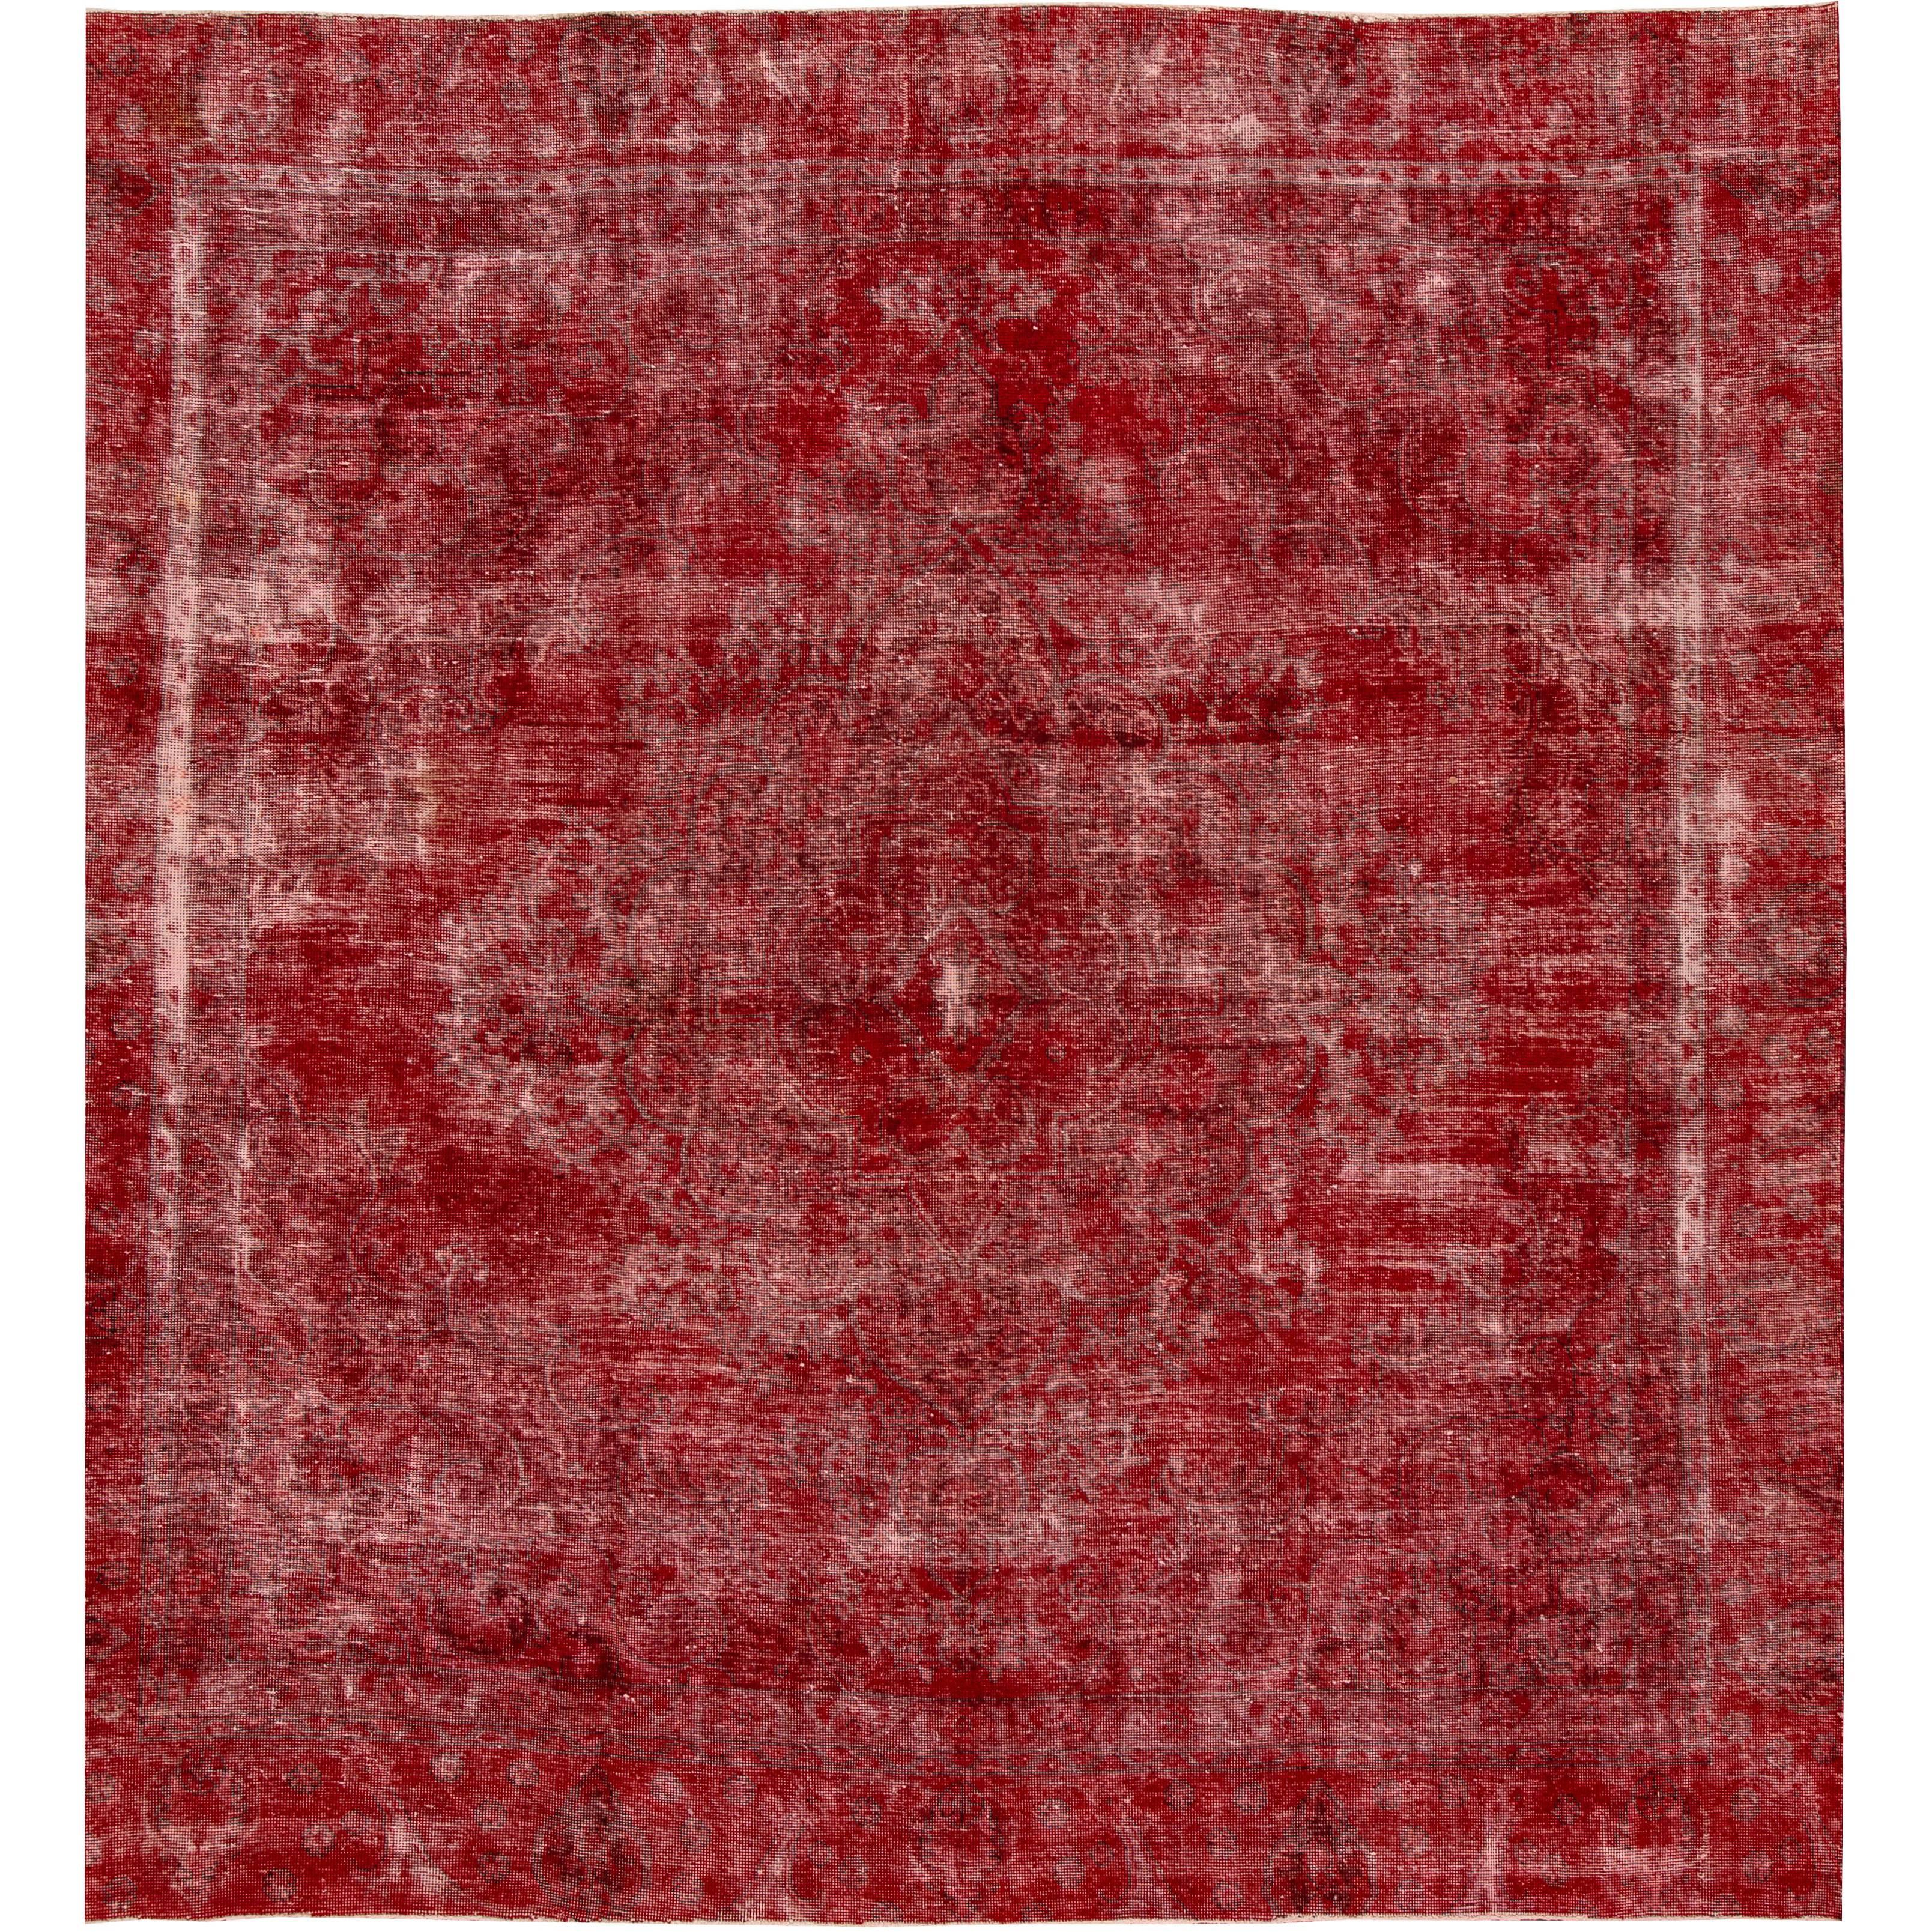 Vintage Handmade Red Overdyed Wool Rug